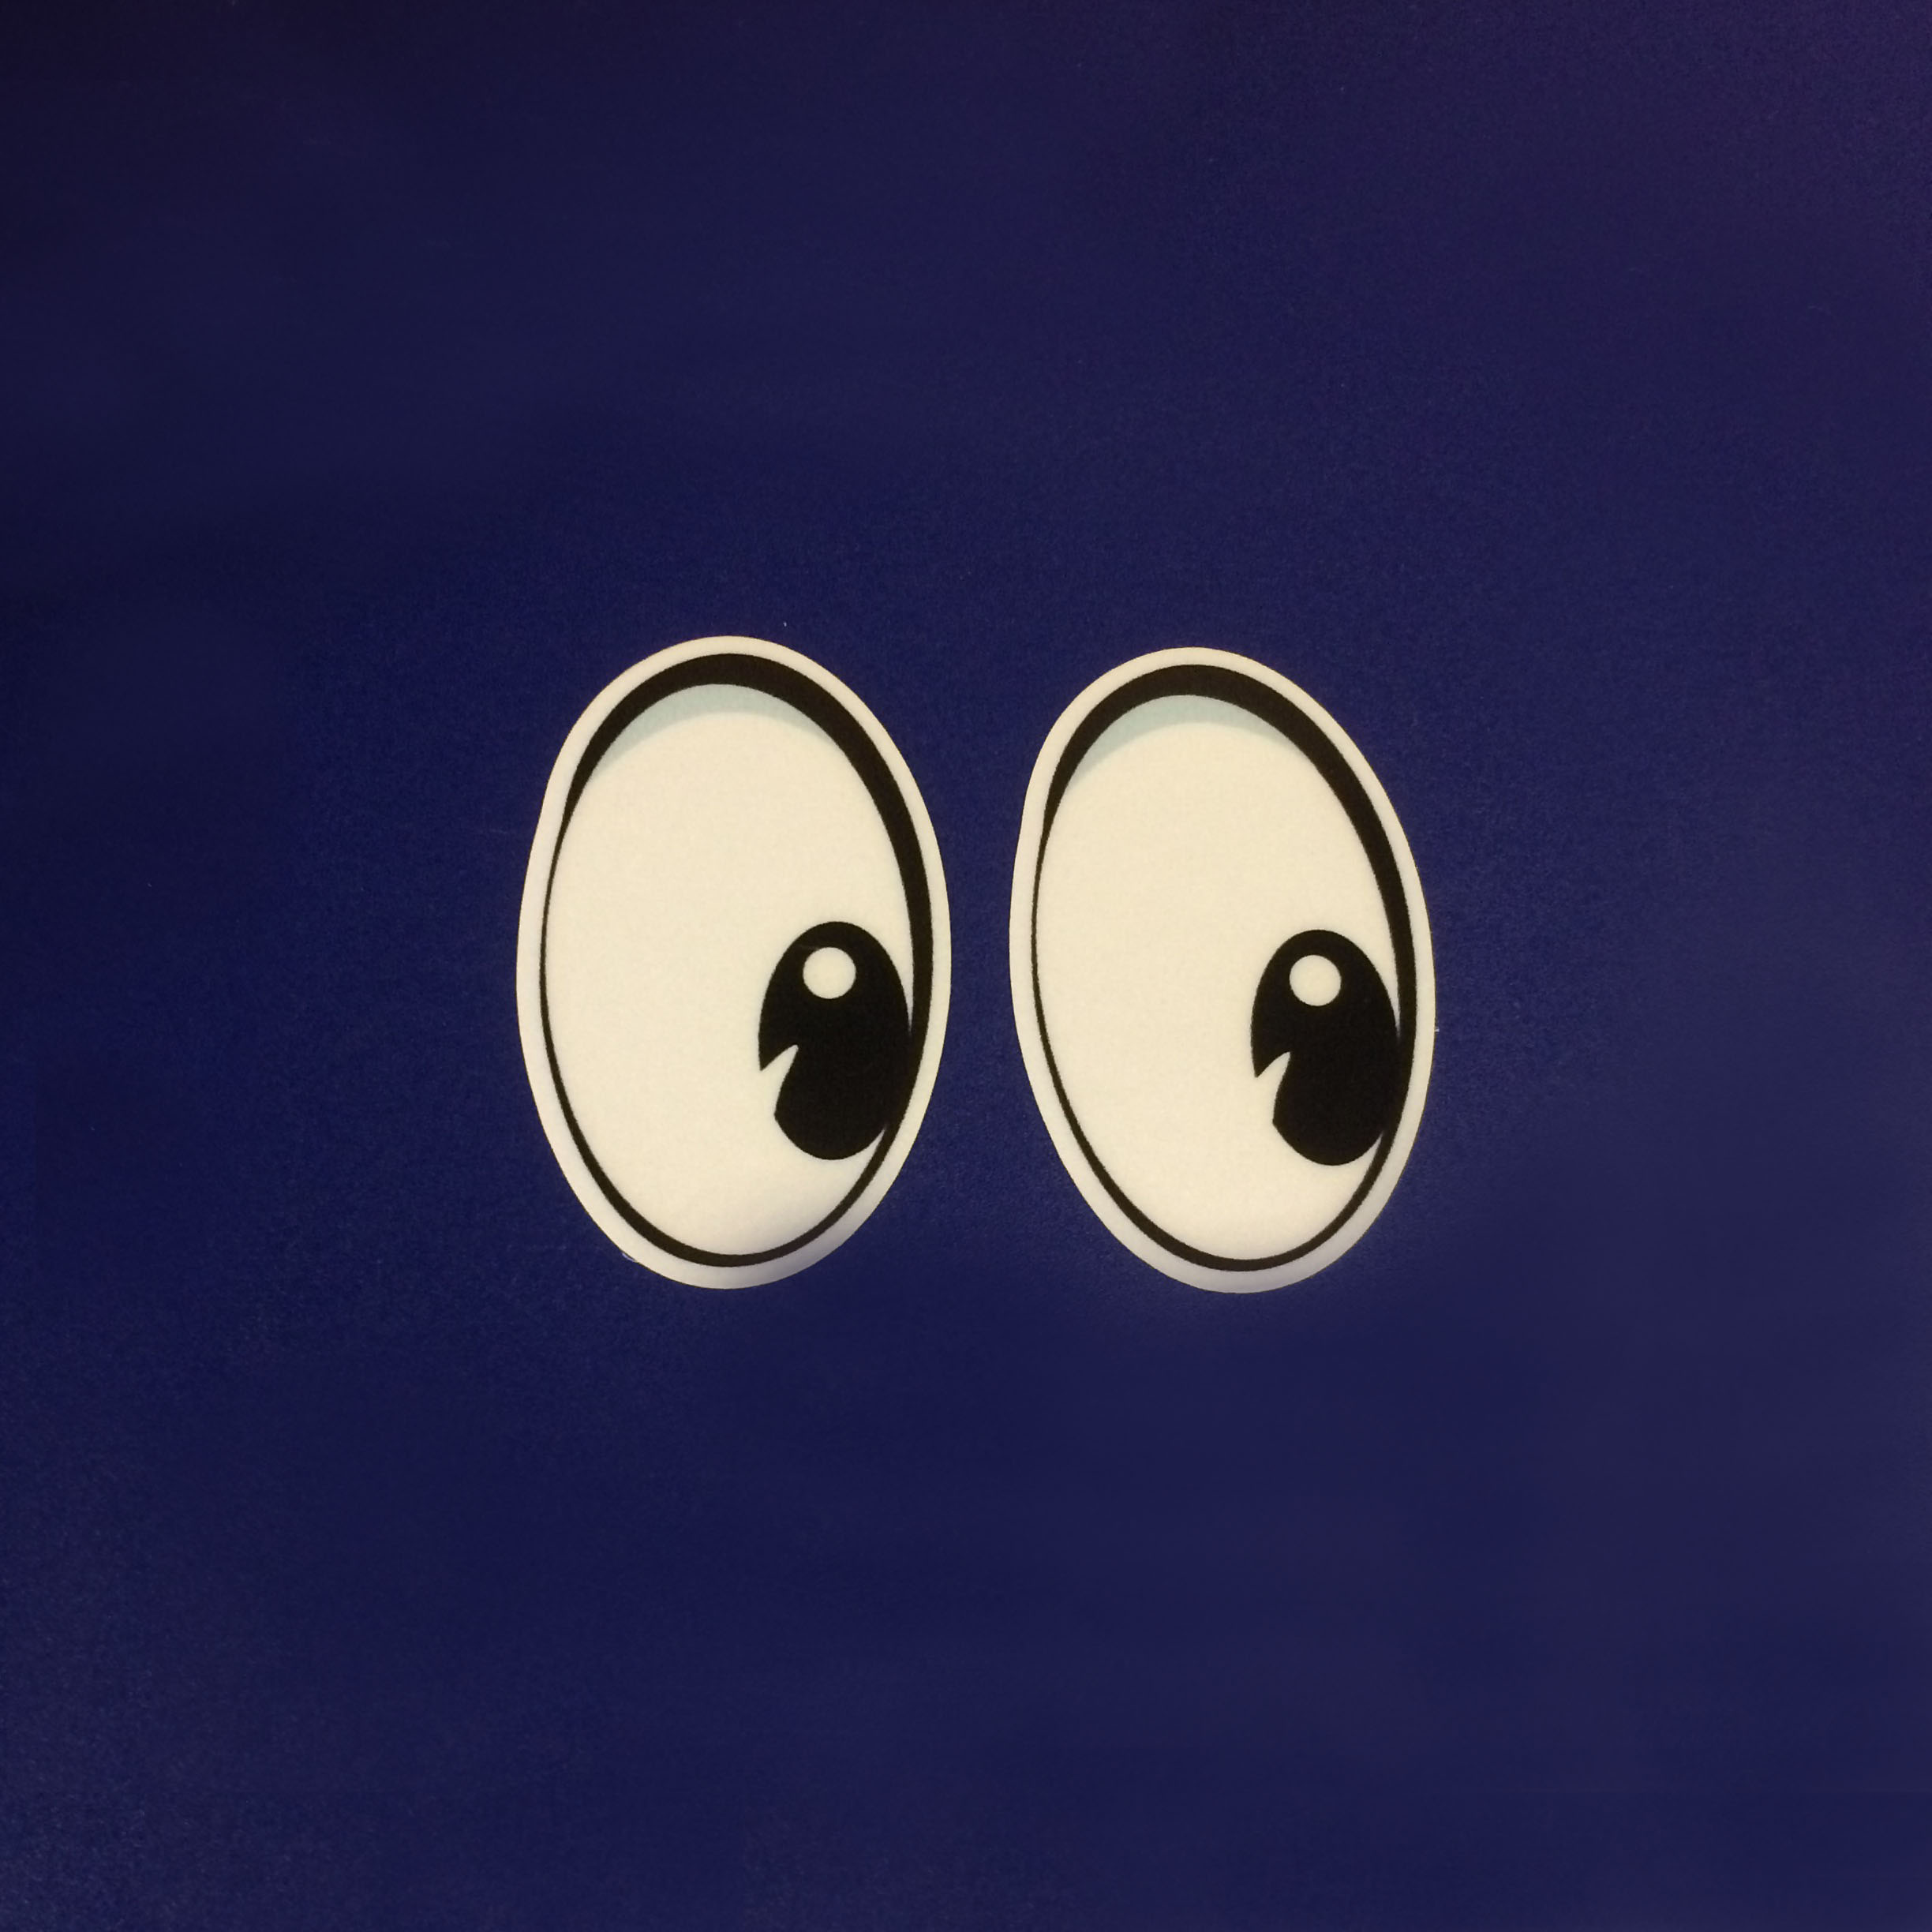 Reflective eyes with black pupils.